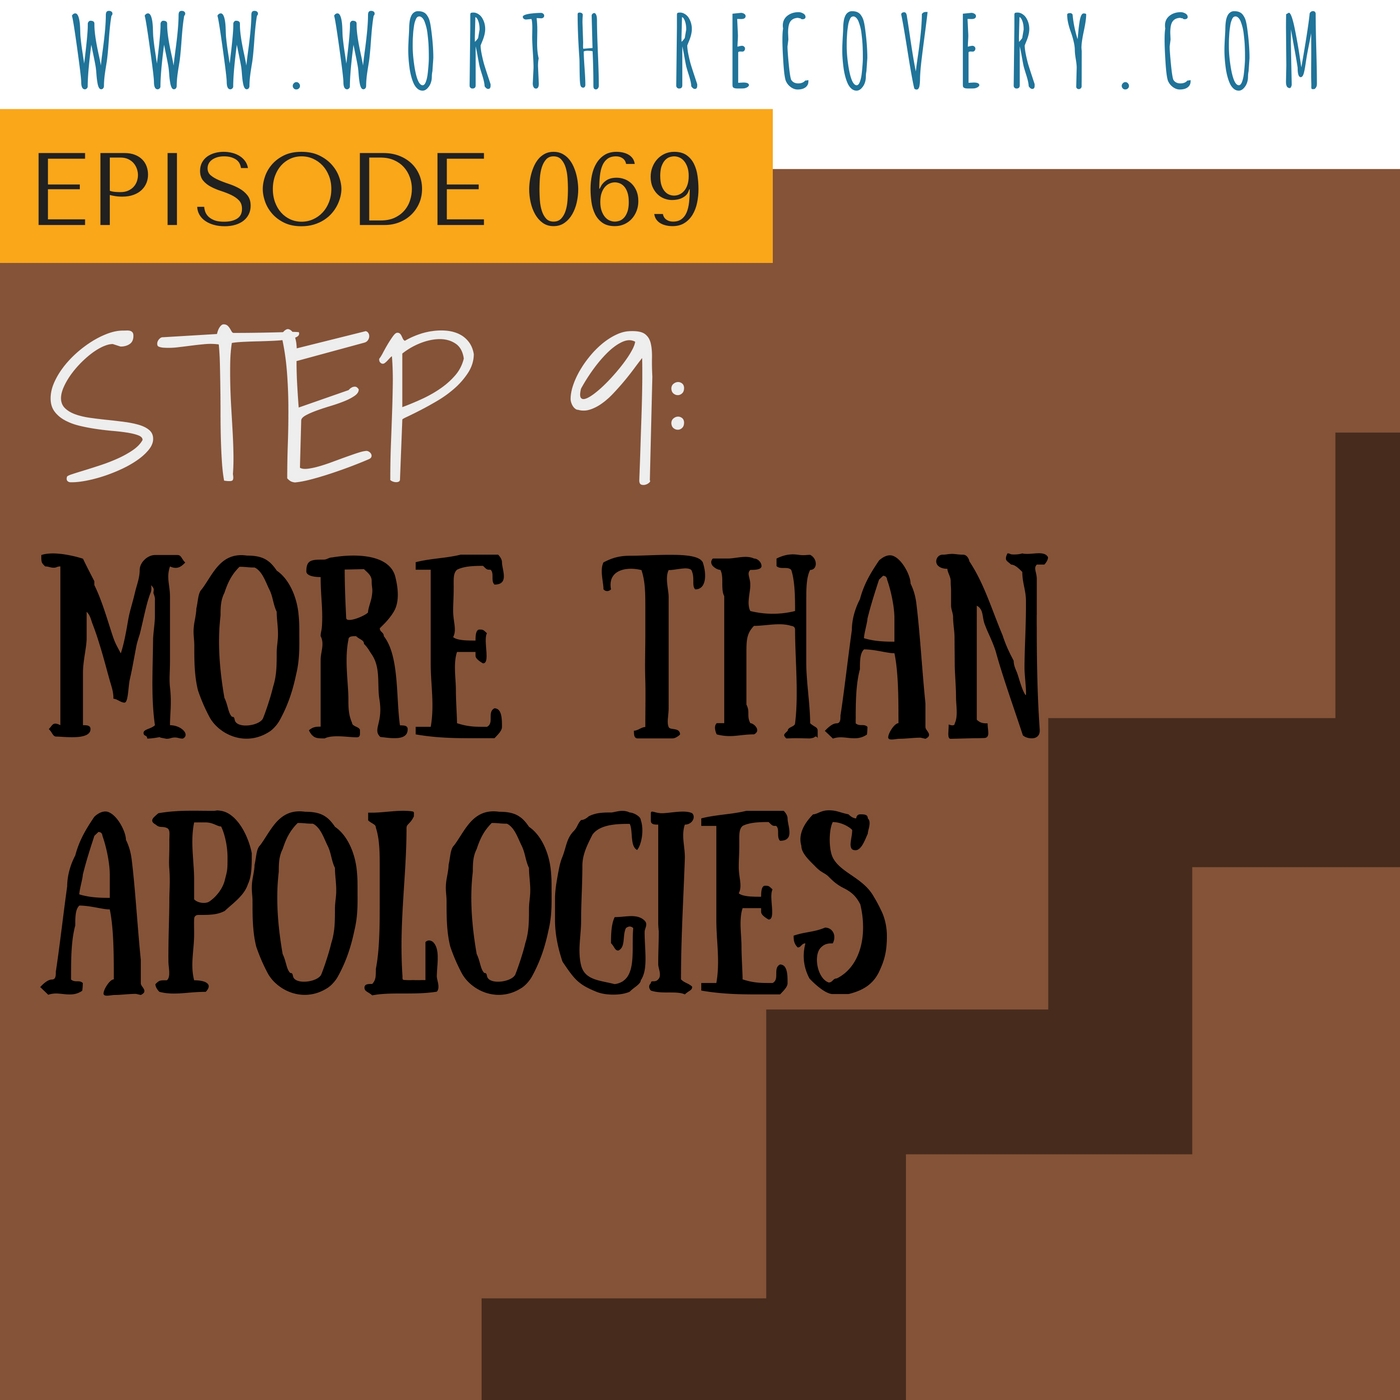 Episode 069: Step 9 - More Than Apologies